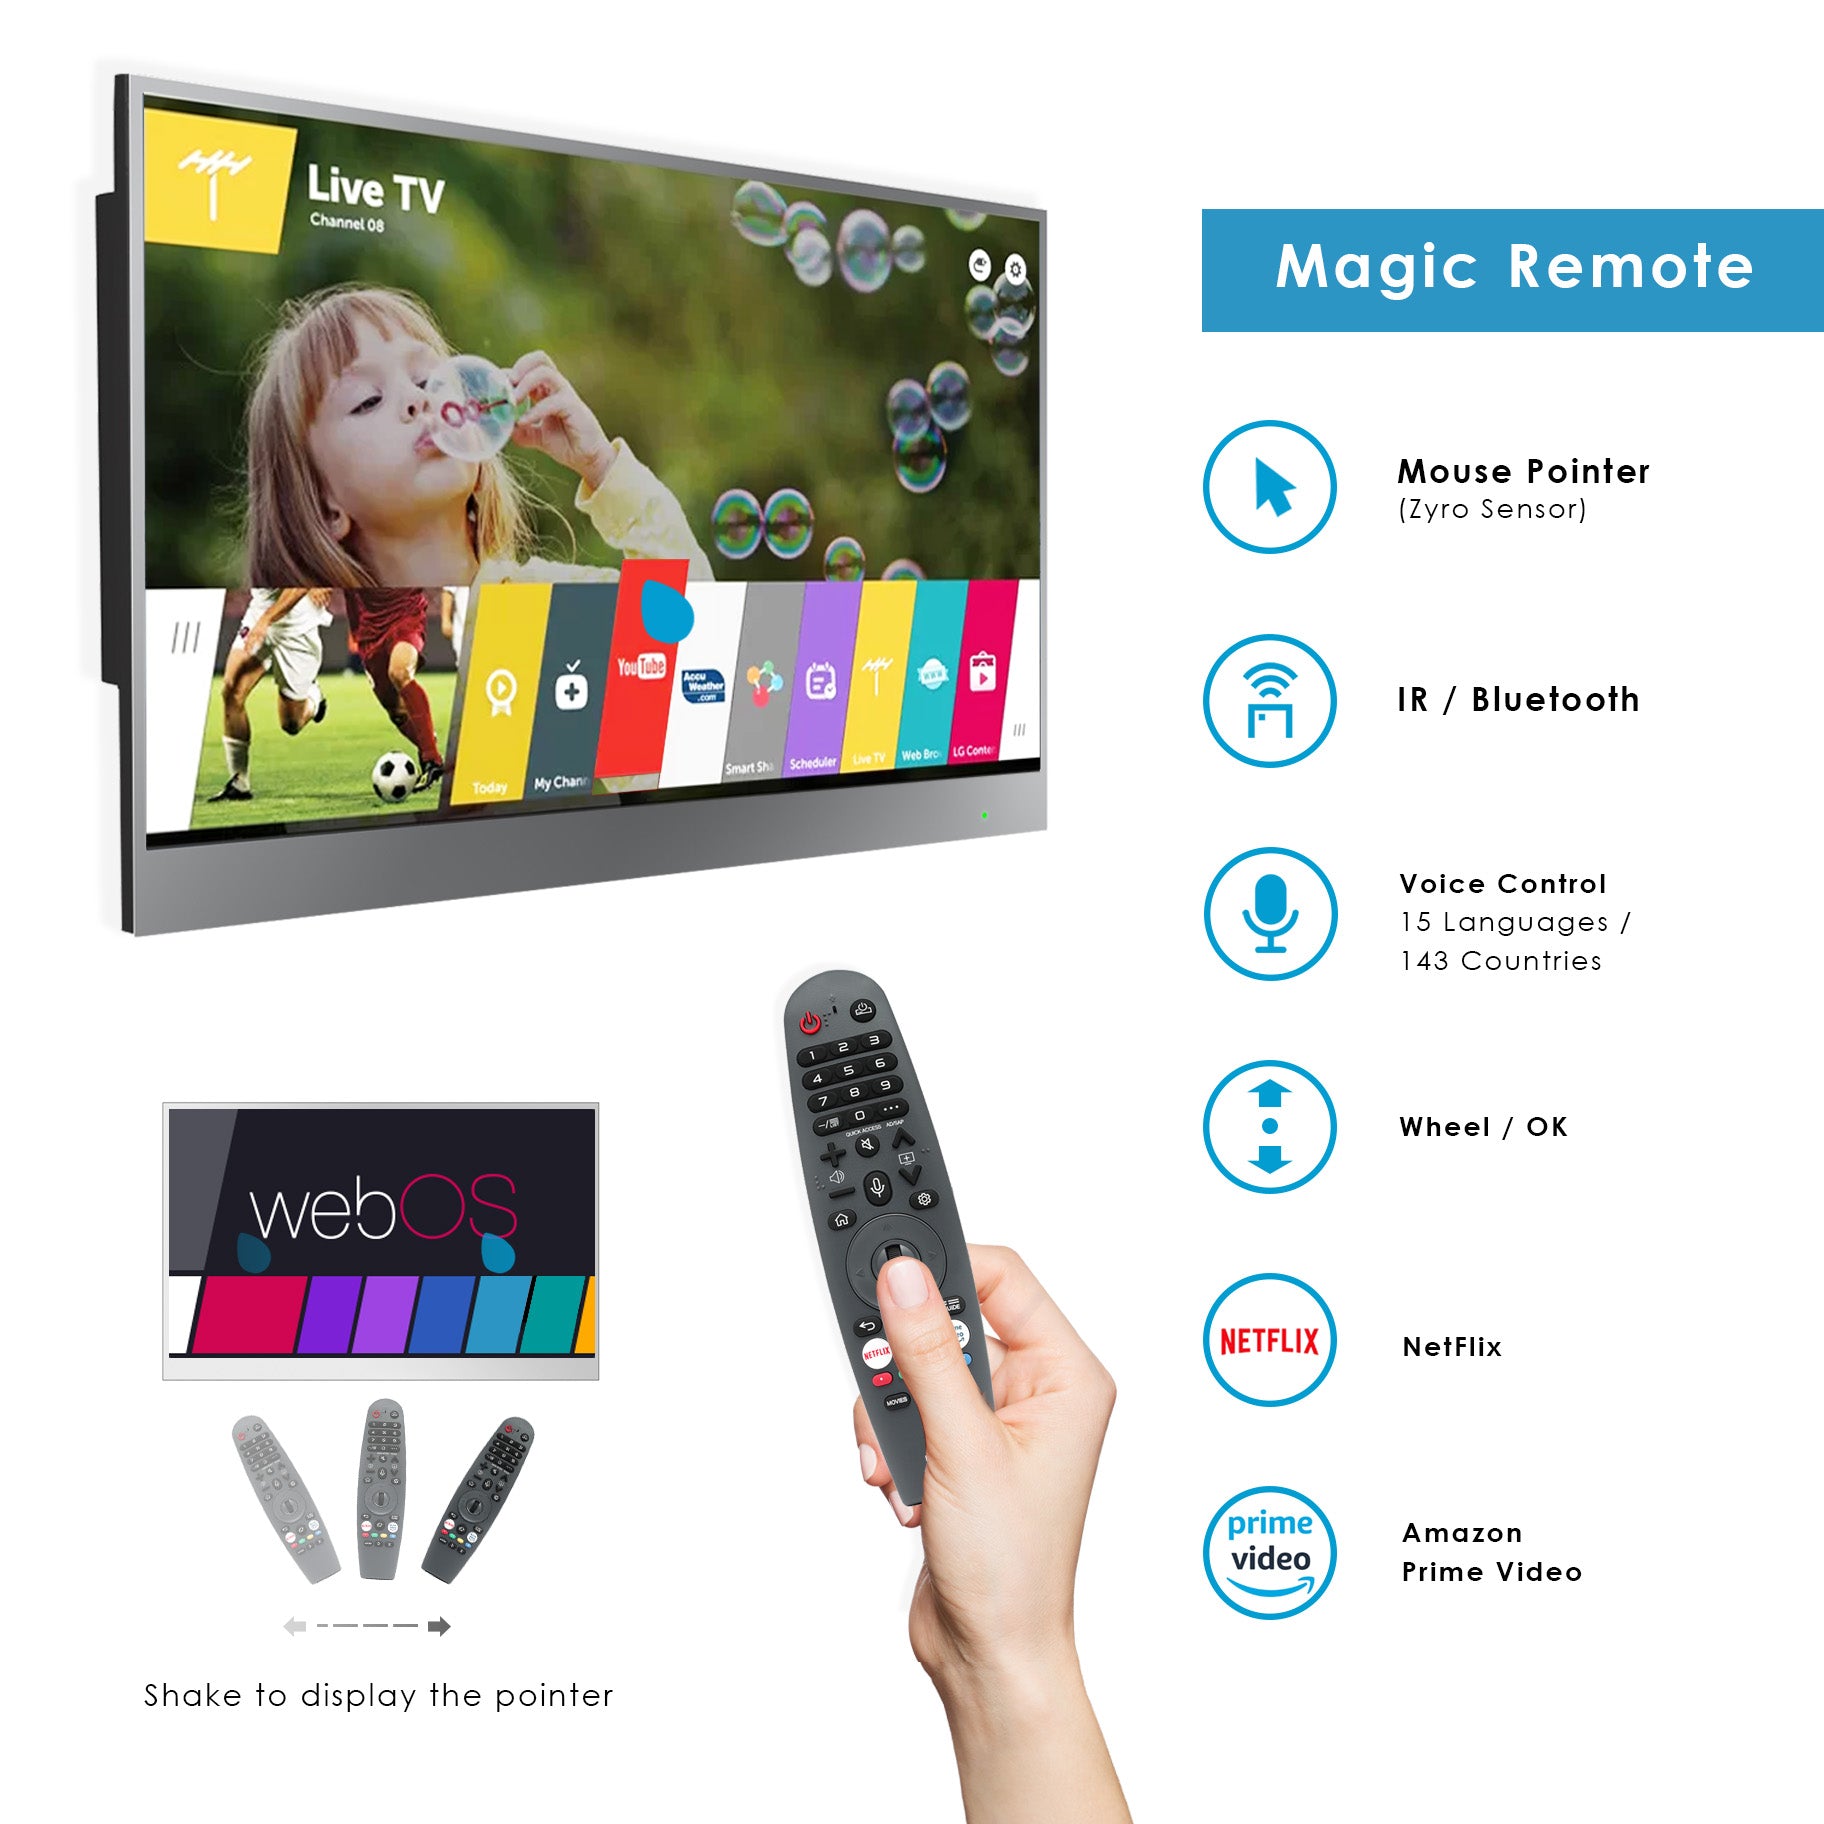 Soulaca 32 pulgadas Smart pantalla táctil espejo TV Android 11.0 WiFi  Bluetooth baño impermeable ATSC Televisión